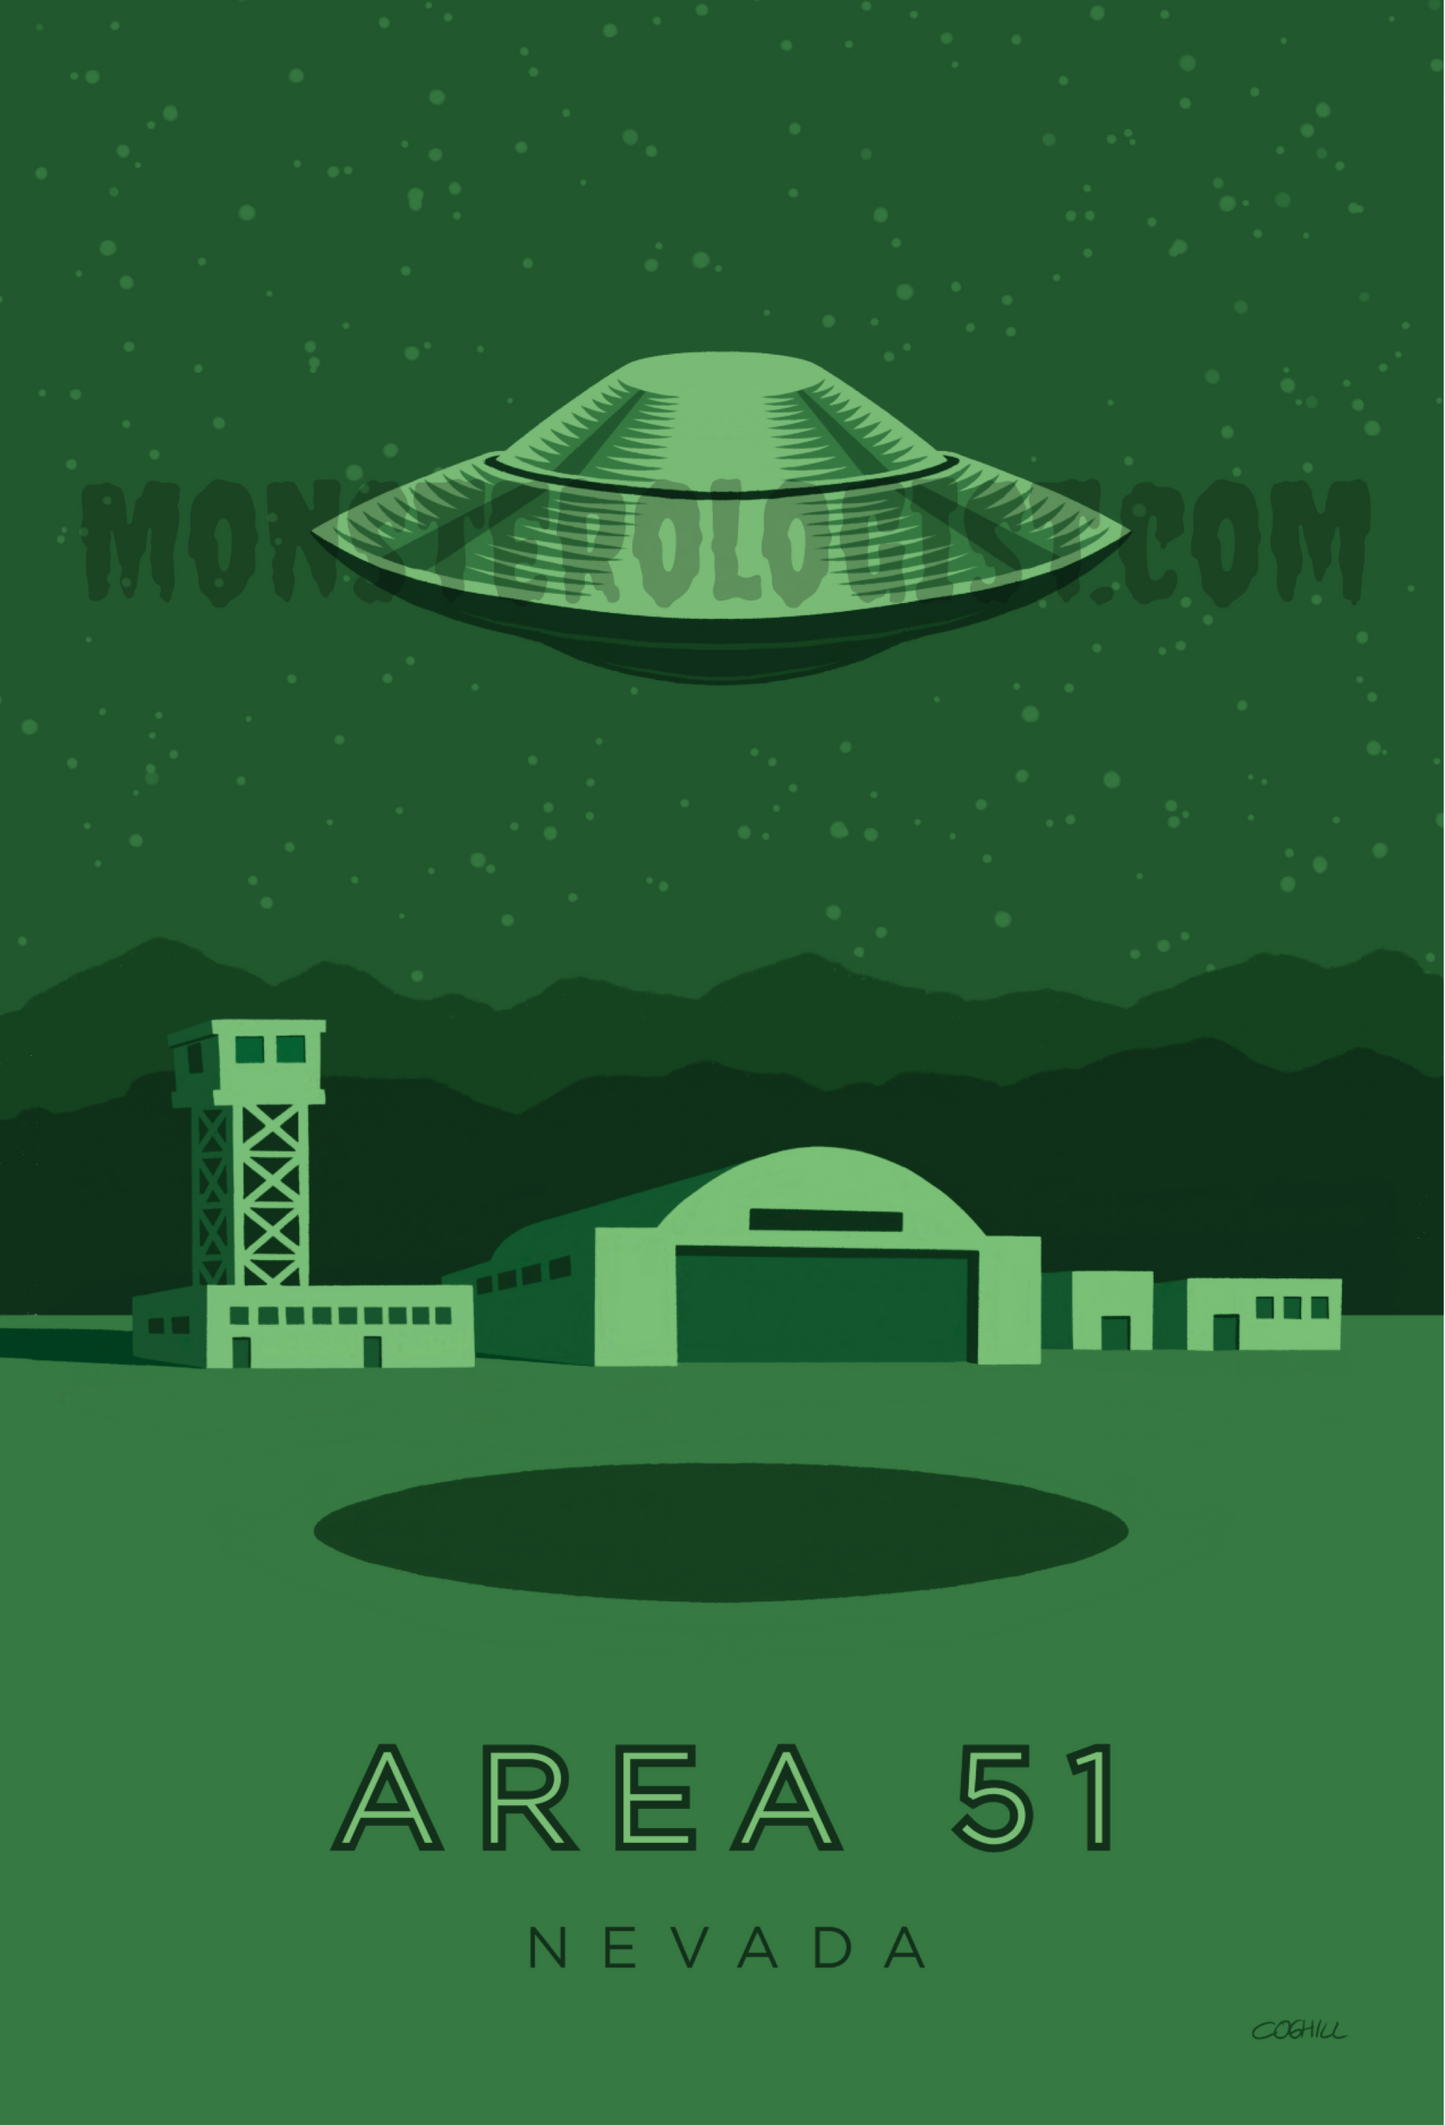 Area 51, Nevada travel postcard 4x6